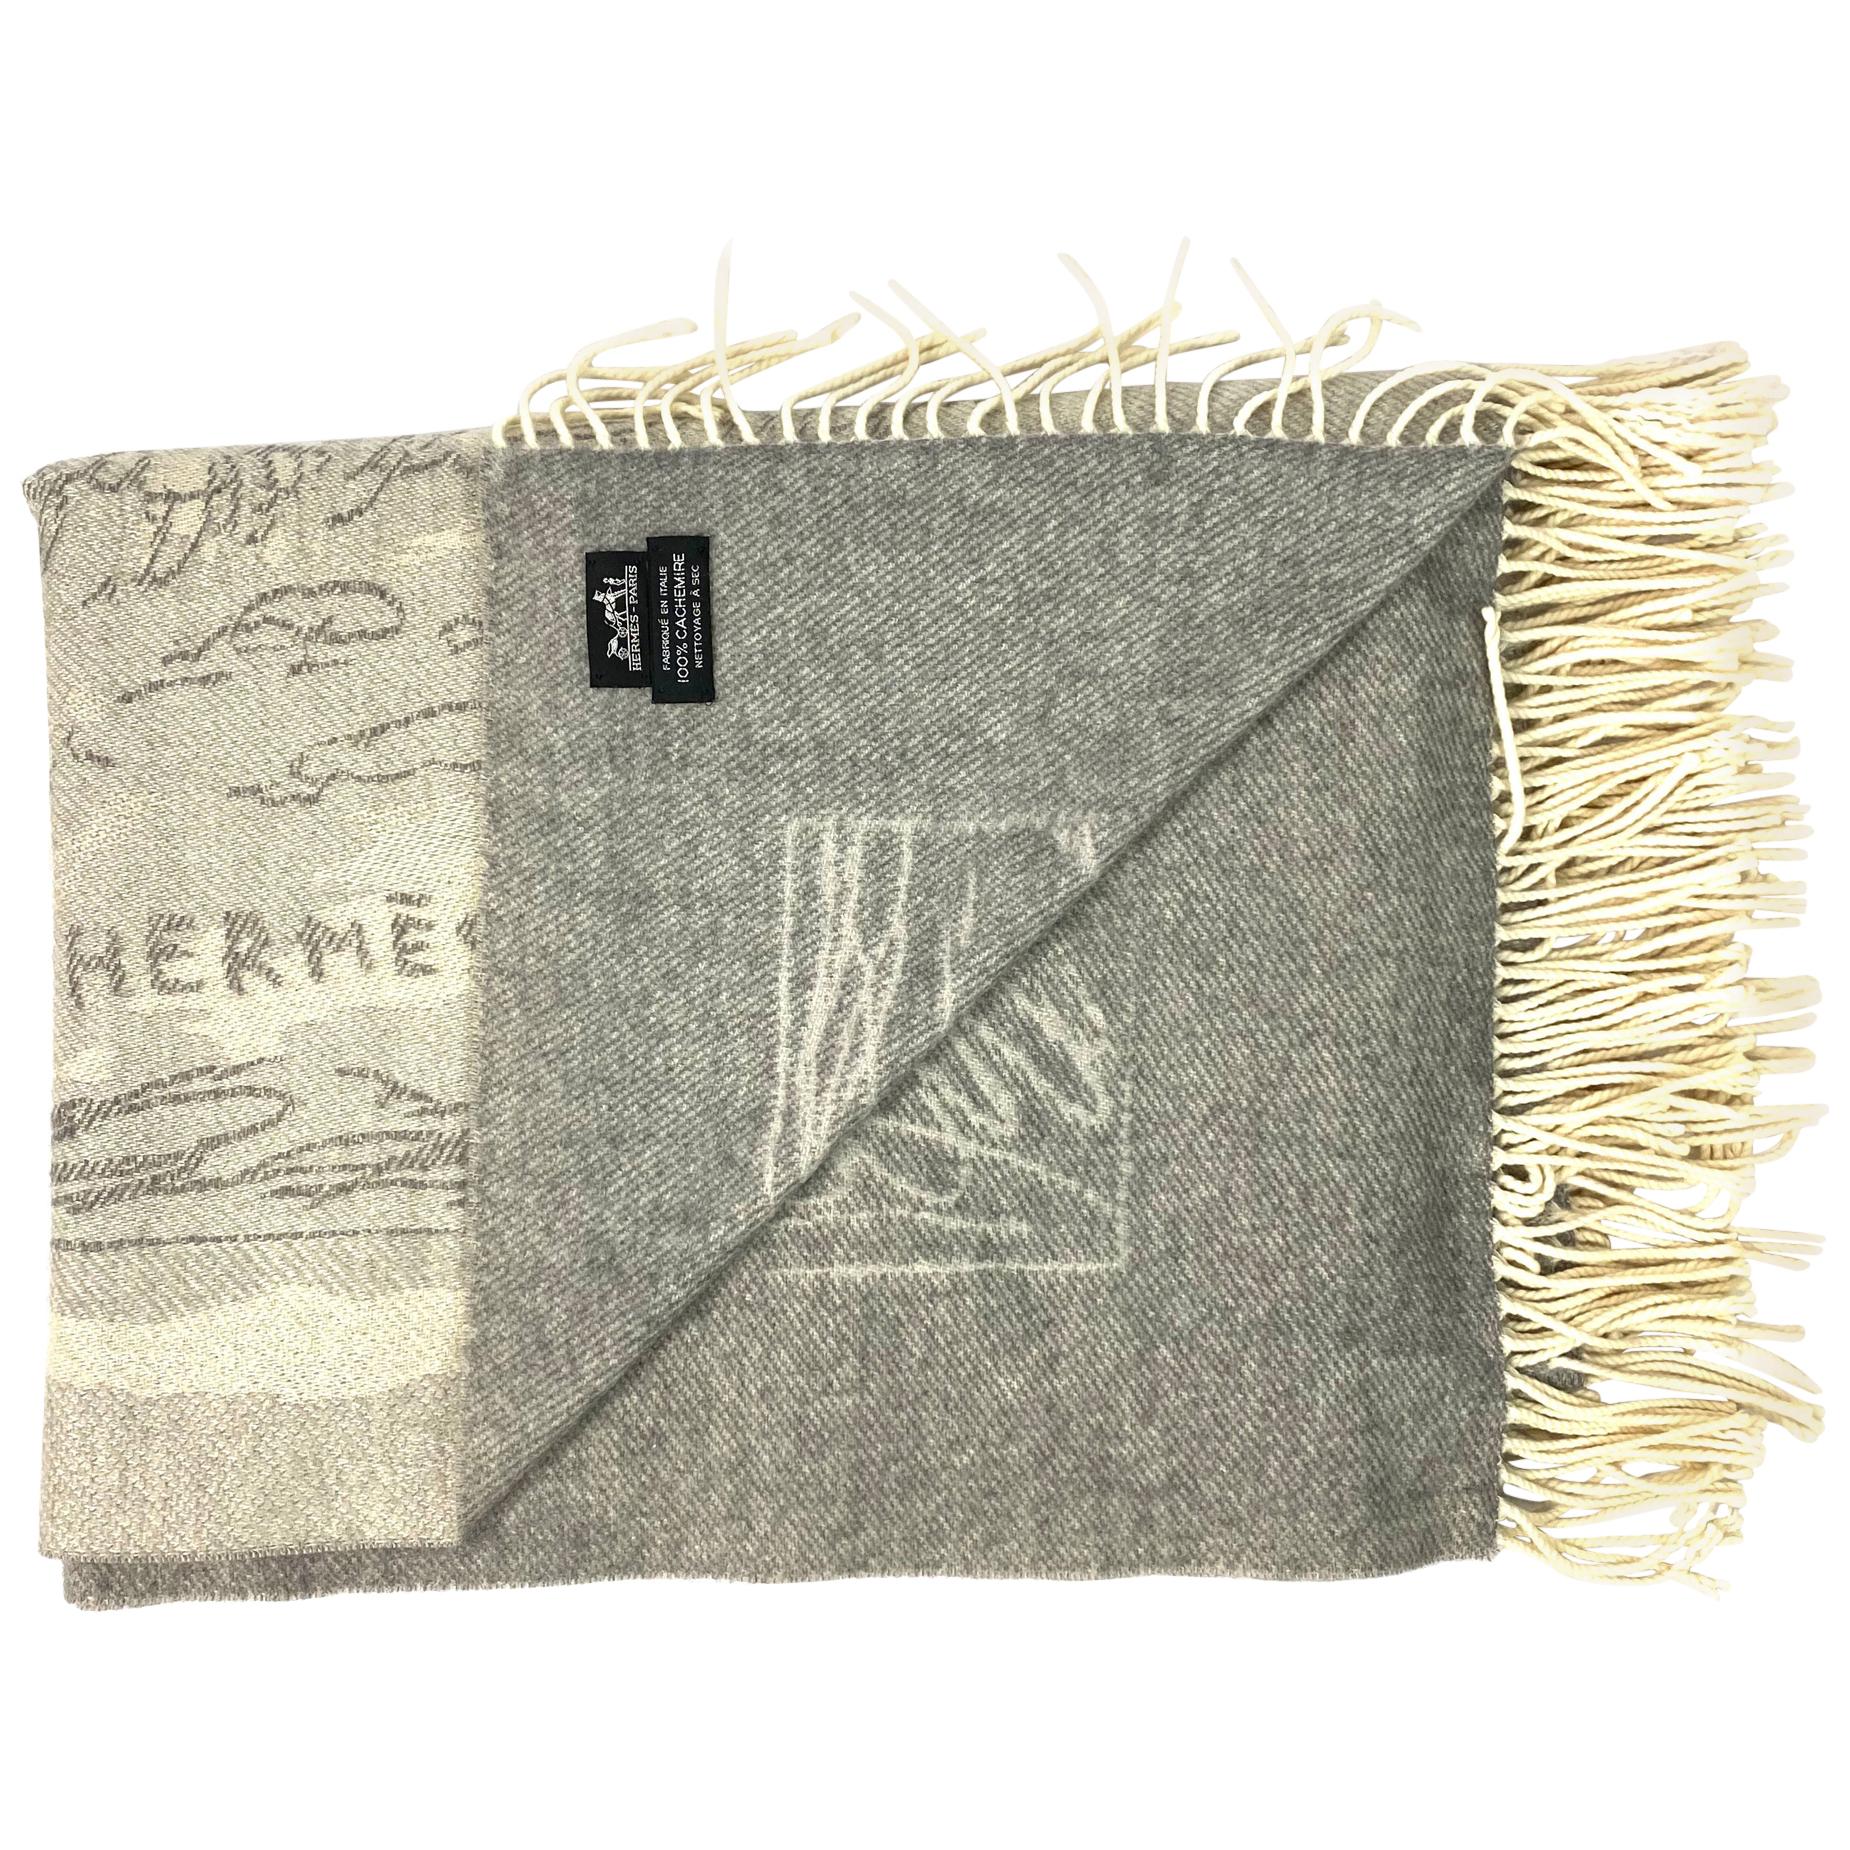 Vintage Hermes Paris Grey Cashmere Throw Blanket